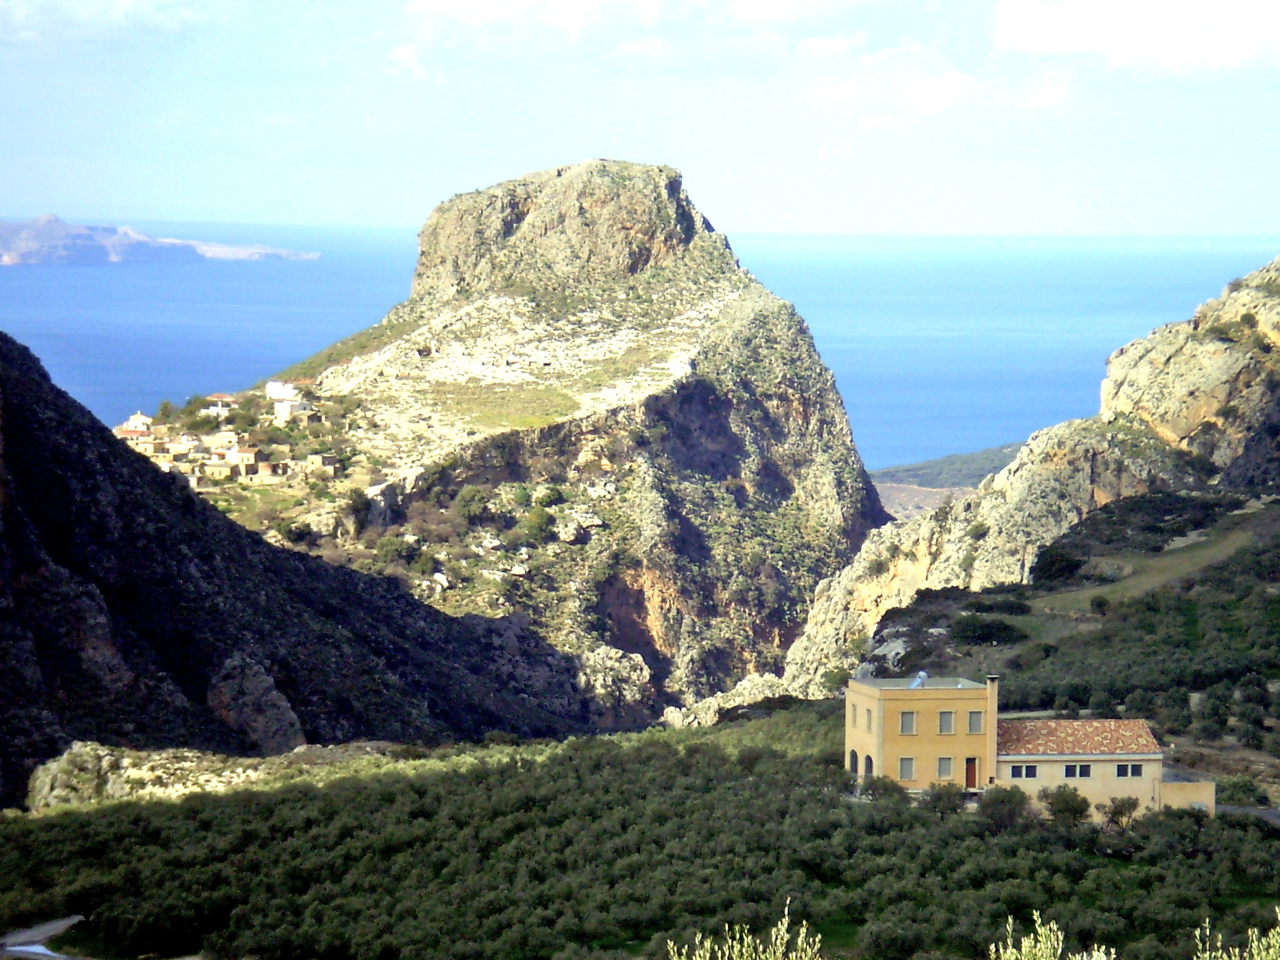 bioleas astrikas estate, olive oil crete, oiive oil tasting, activities crete, private tours crete, crete travel 